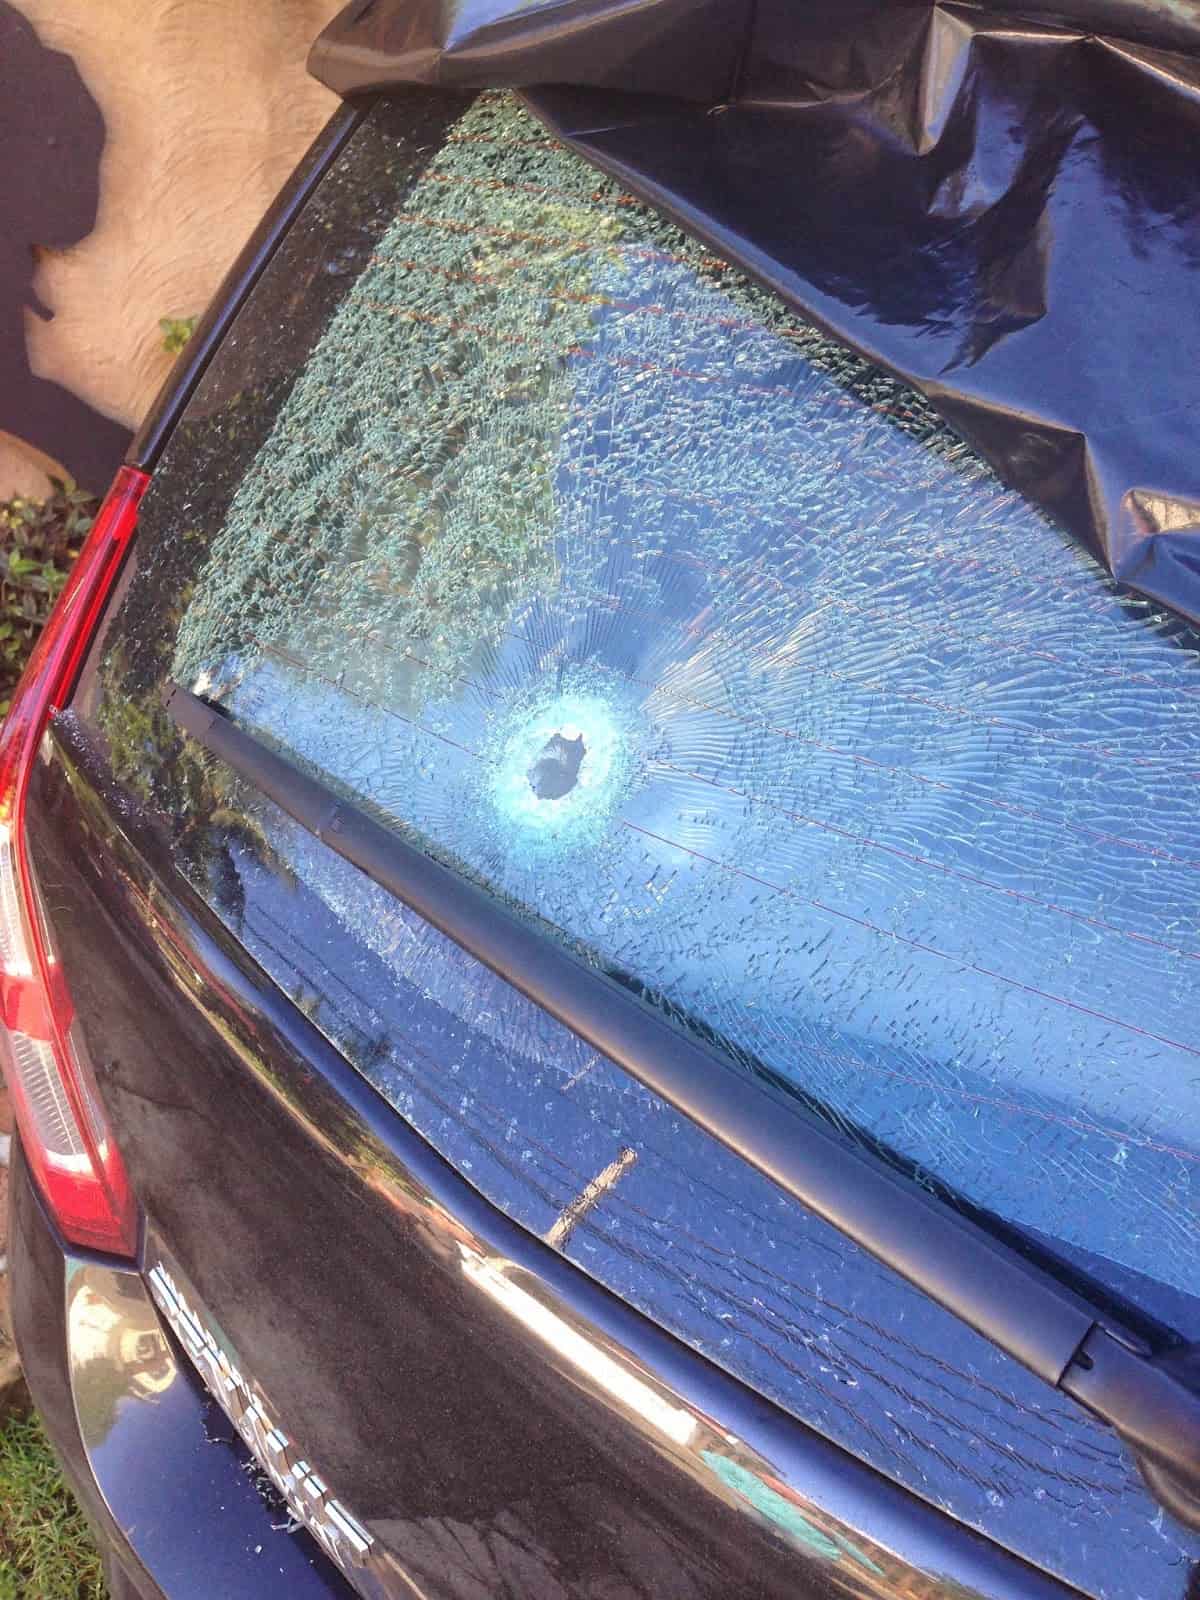 Bullethole in a guest's rental car in Ilhabela, Brazil